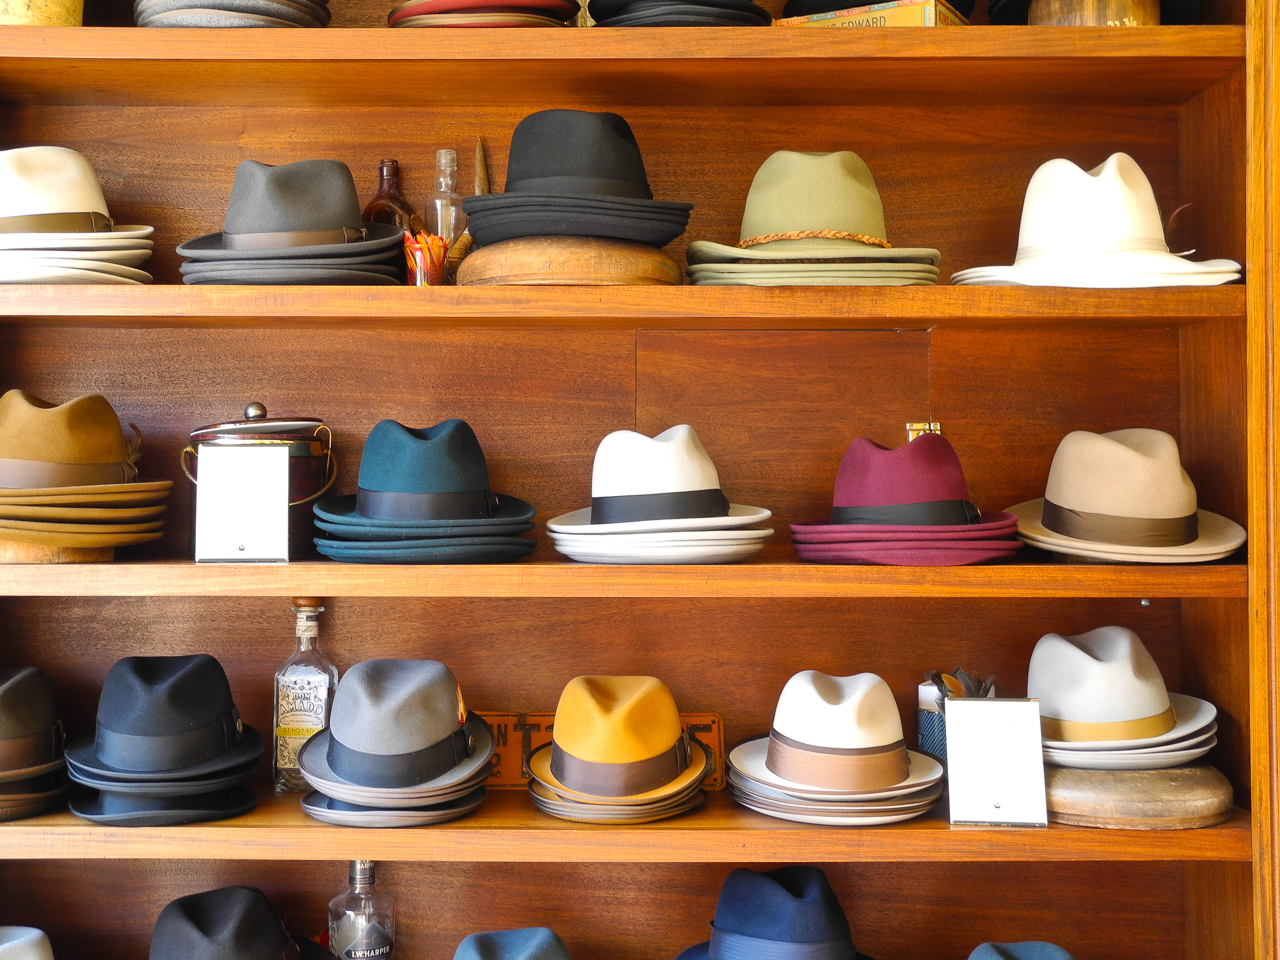 Goorin Hat Shop at Washington Square Park